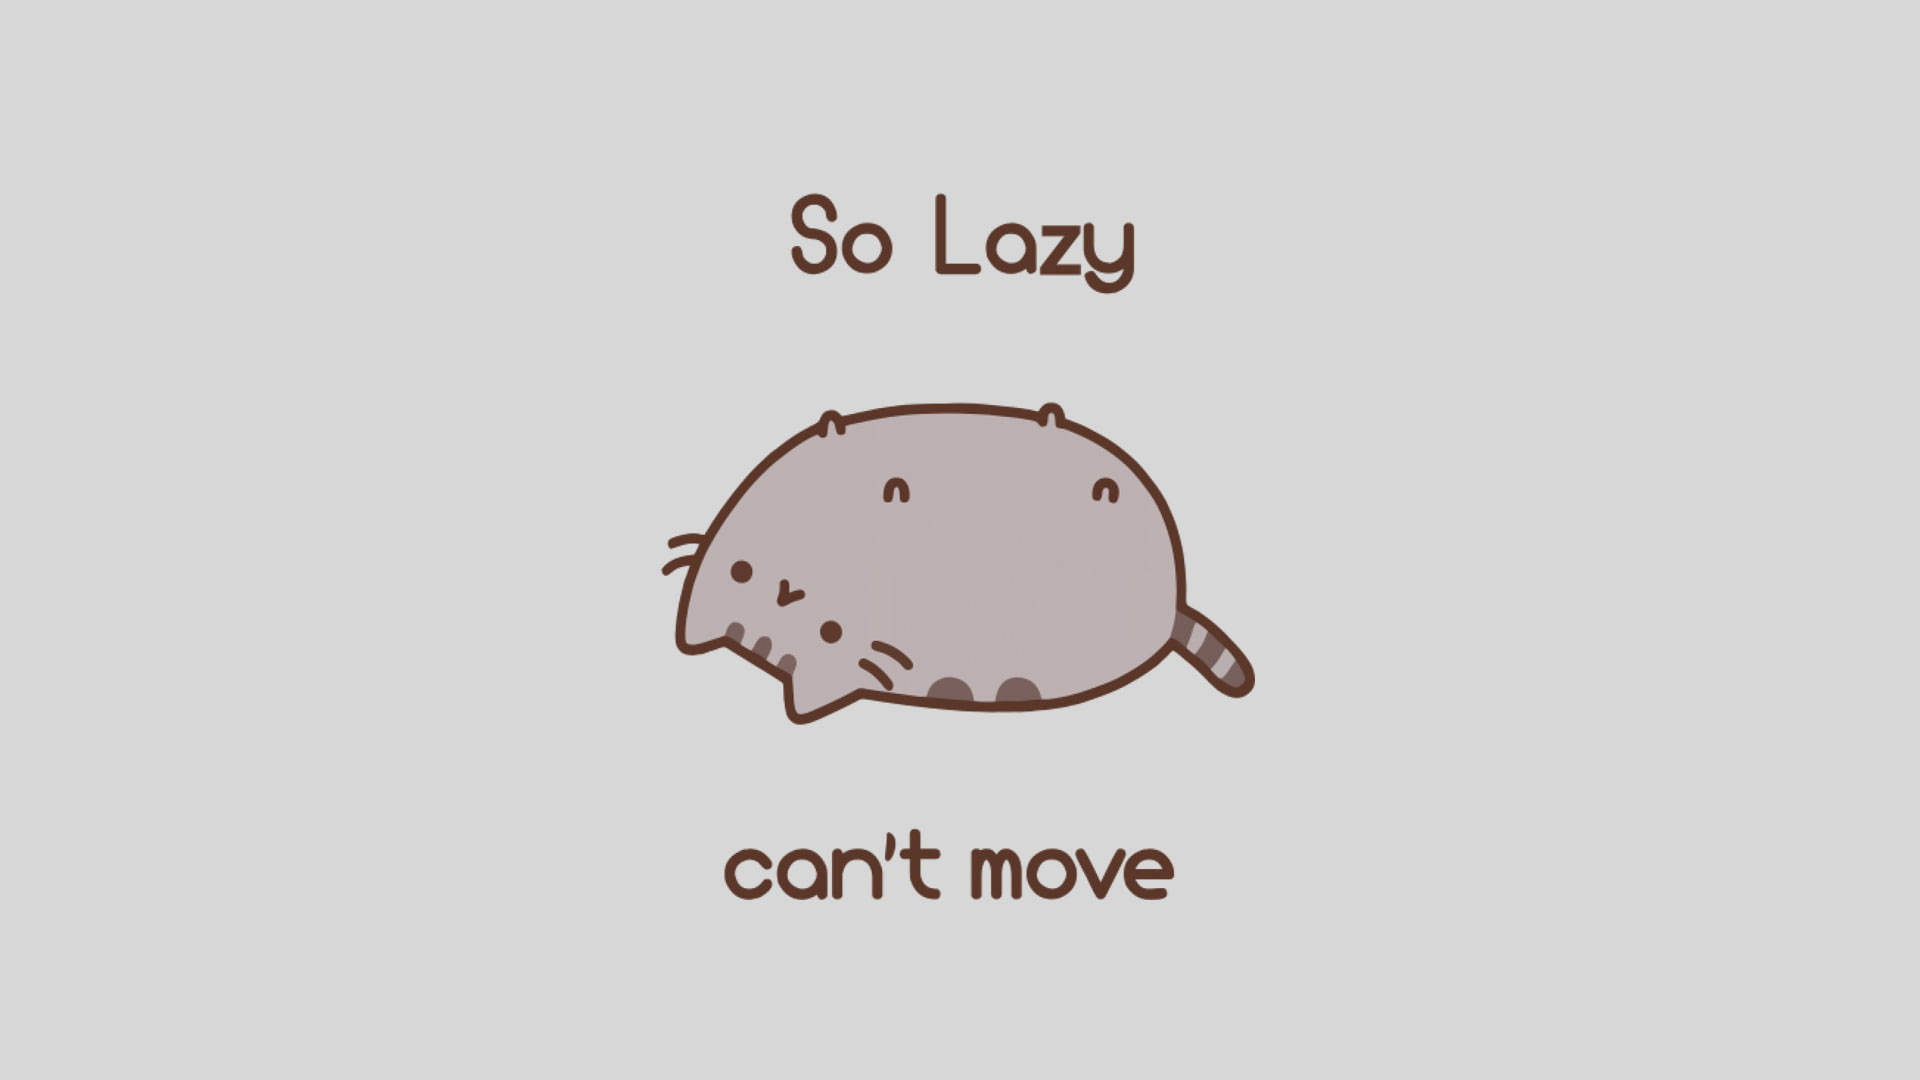 Lazy Pusheen cat meme wallpaper